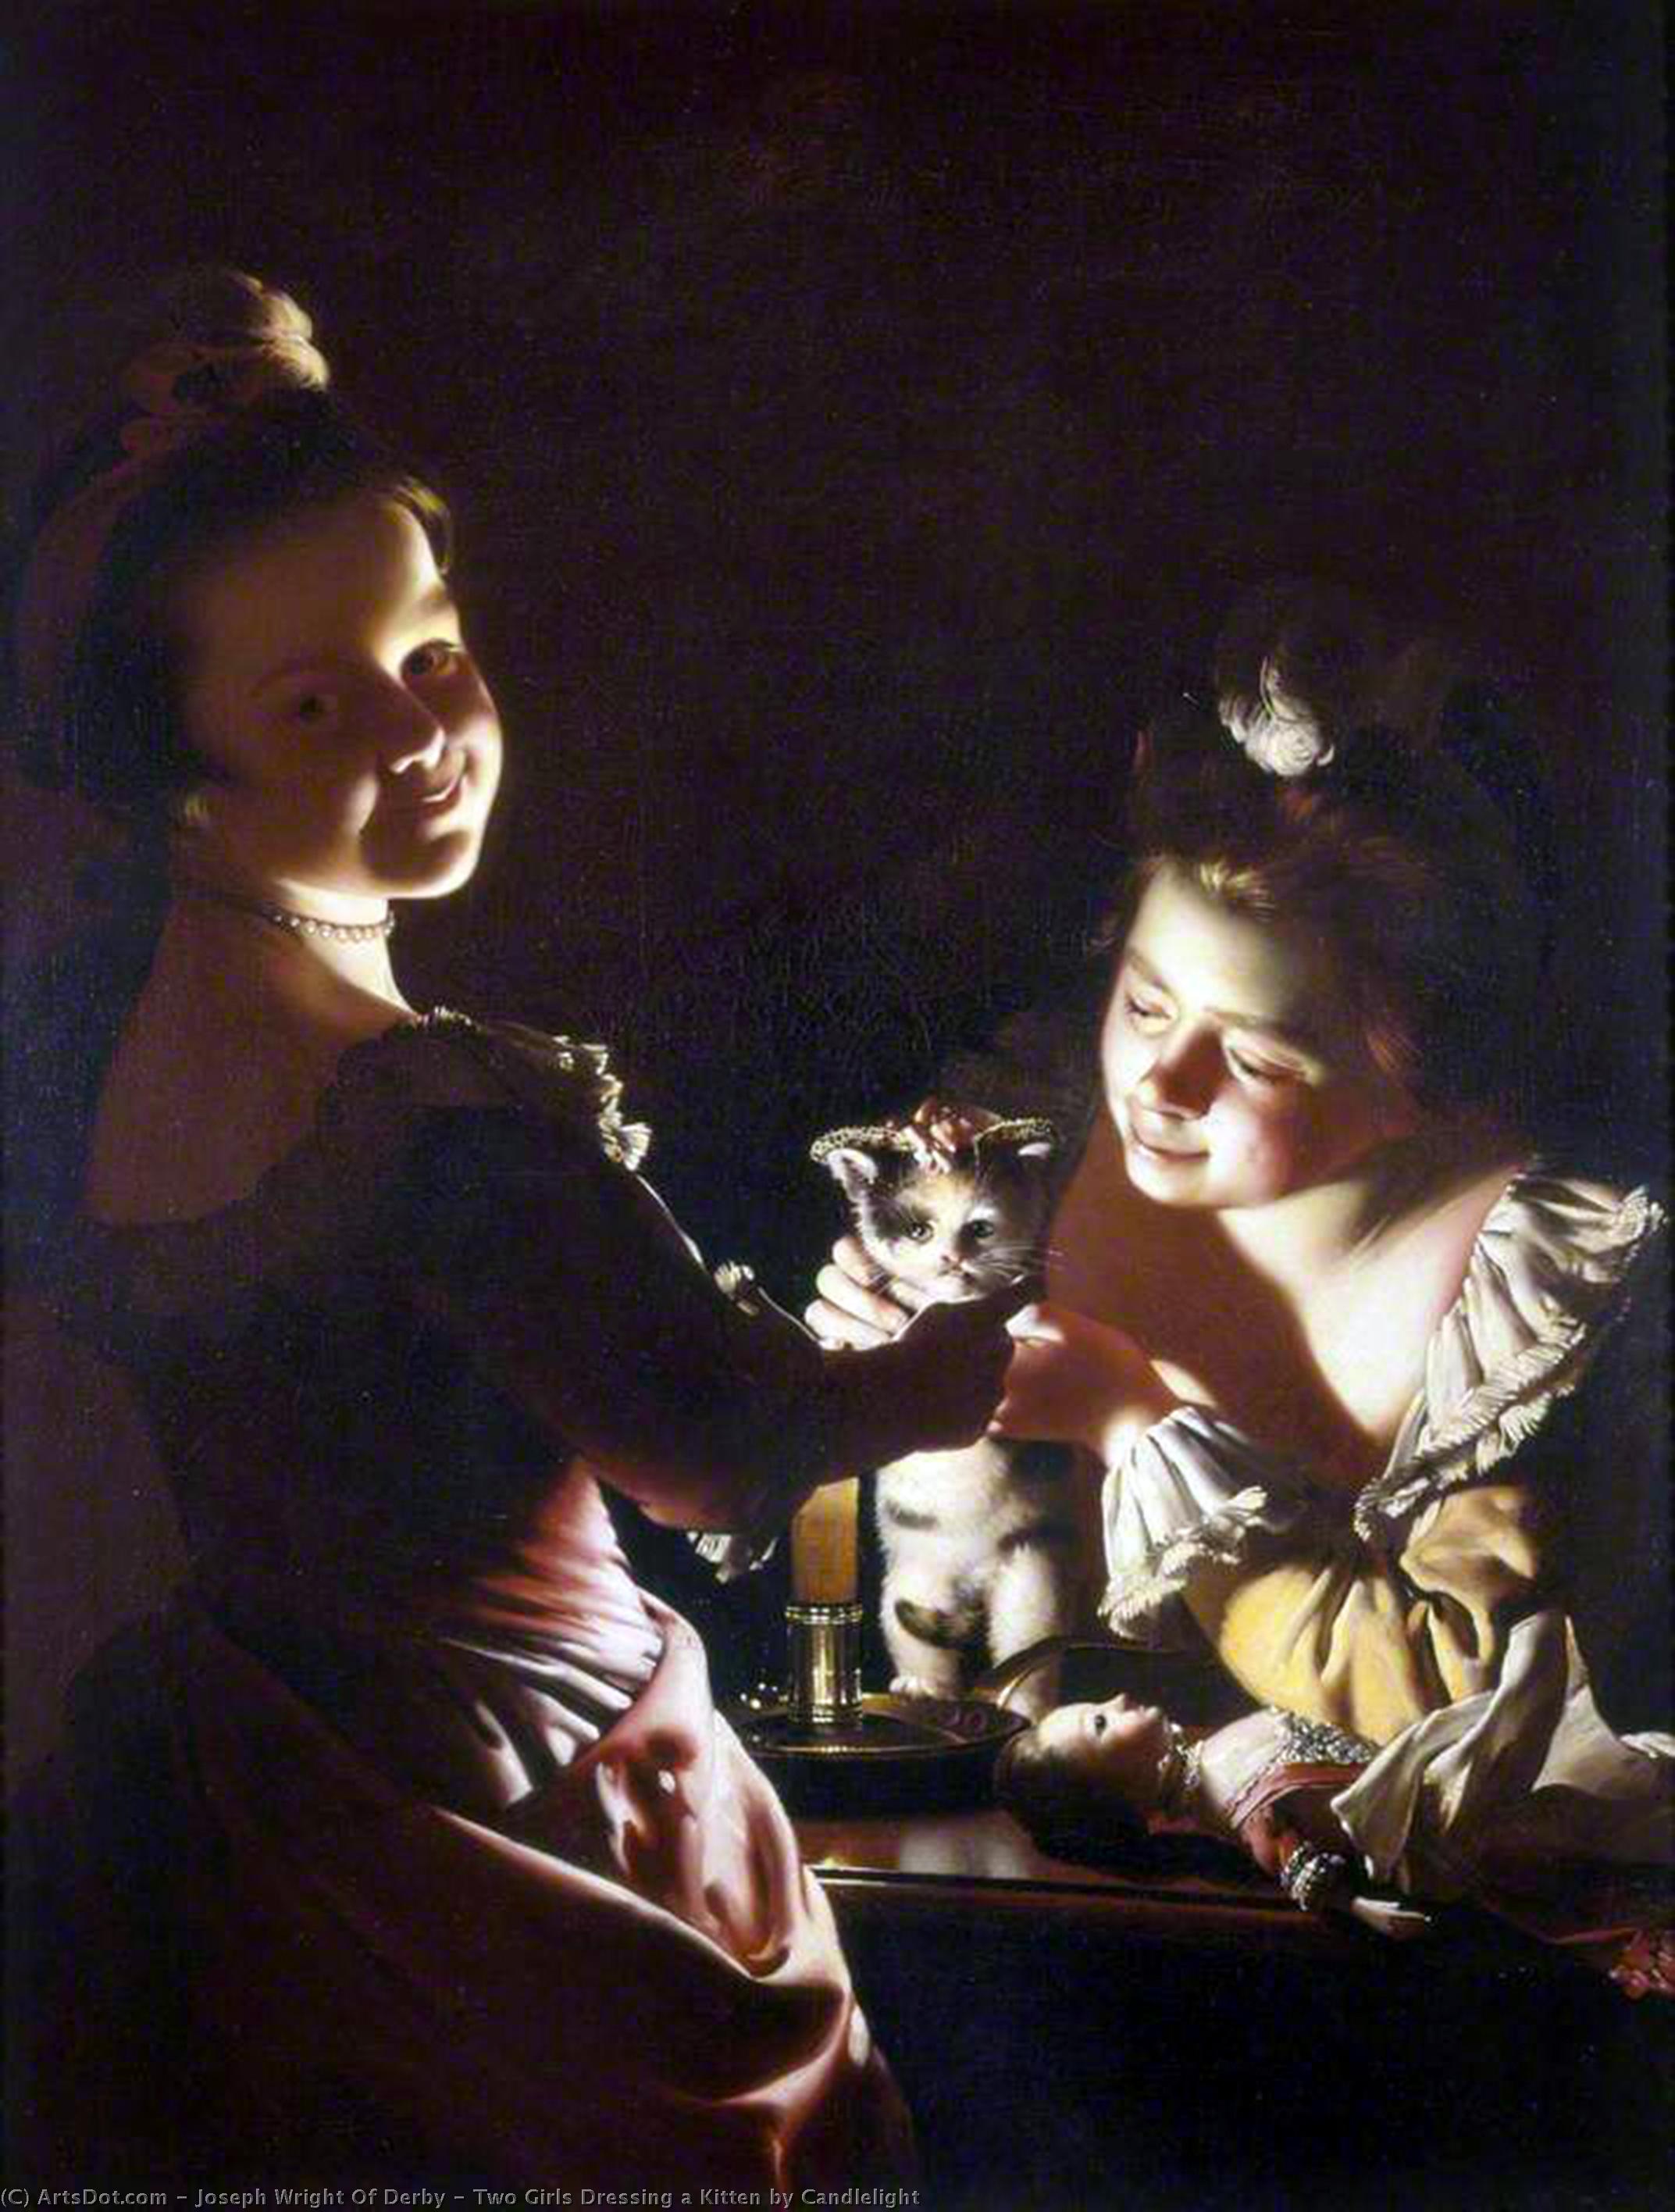 WikiOO.org - دایره المعارف هنرهای زیبا - نقاشی، آثار هنری Joseph Wright Of Derby - Two Girls Dressing a Kitten by Candlelight